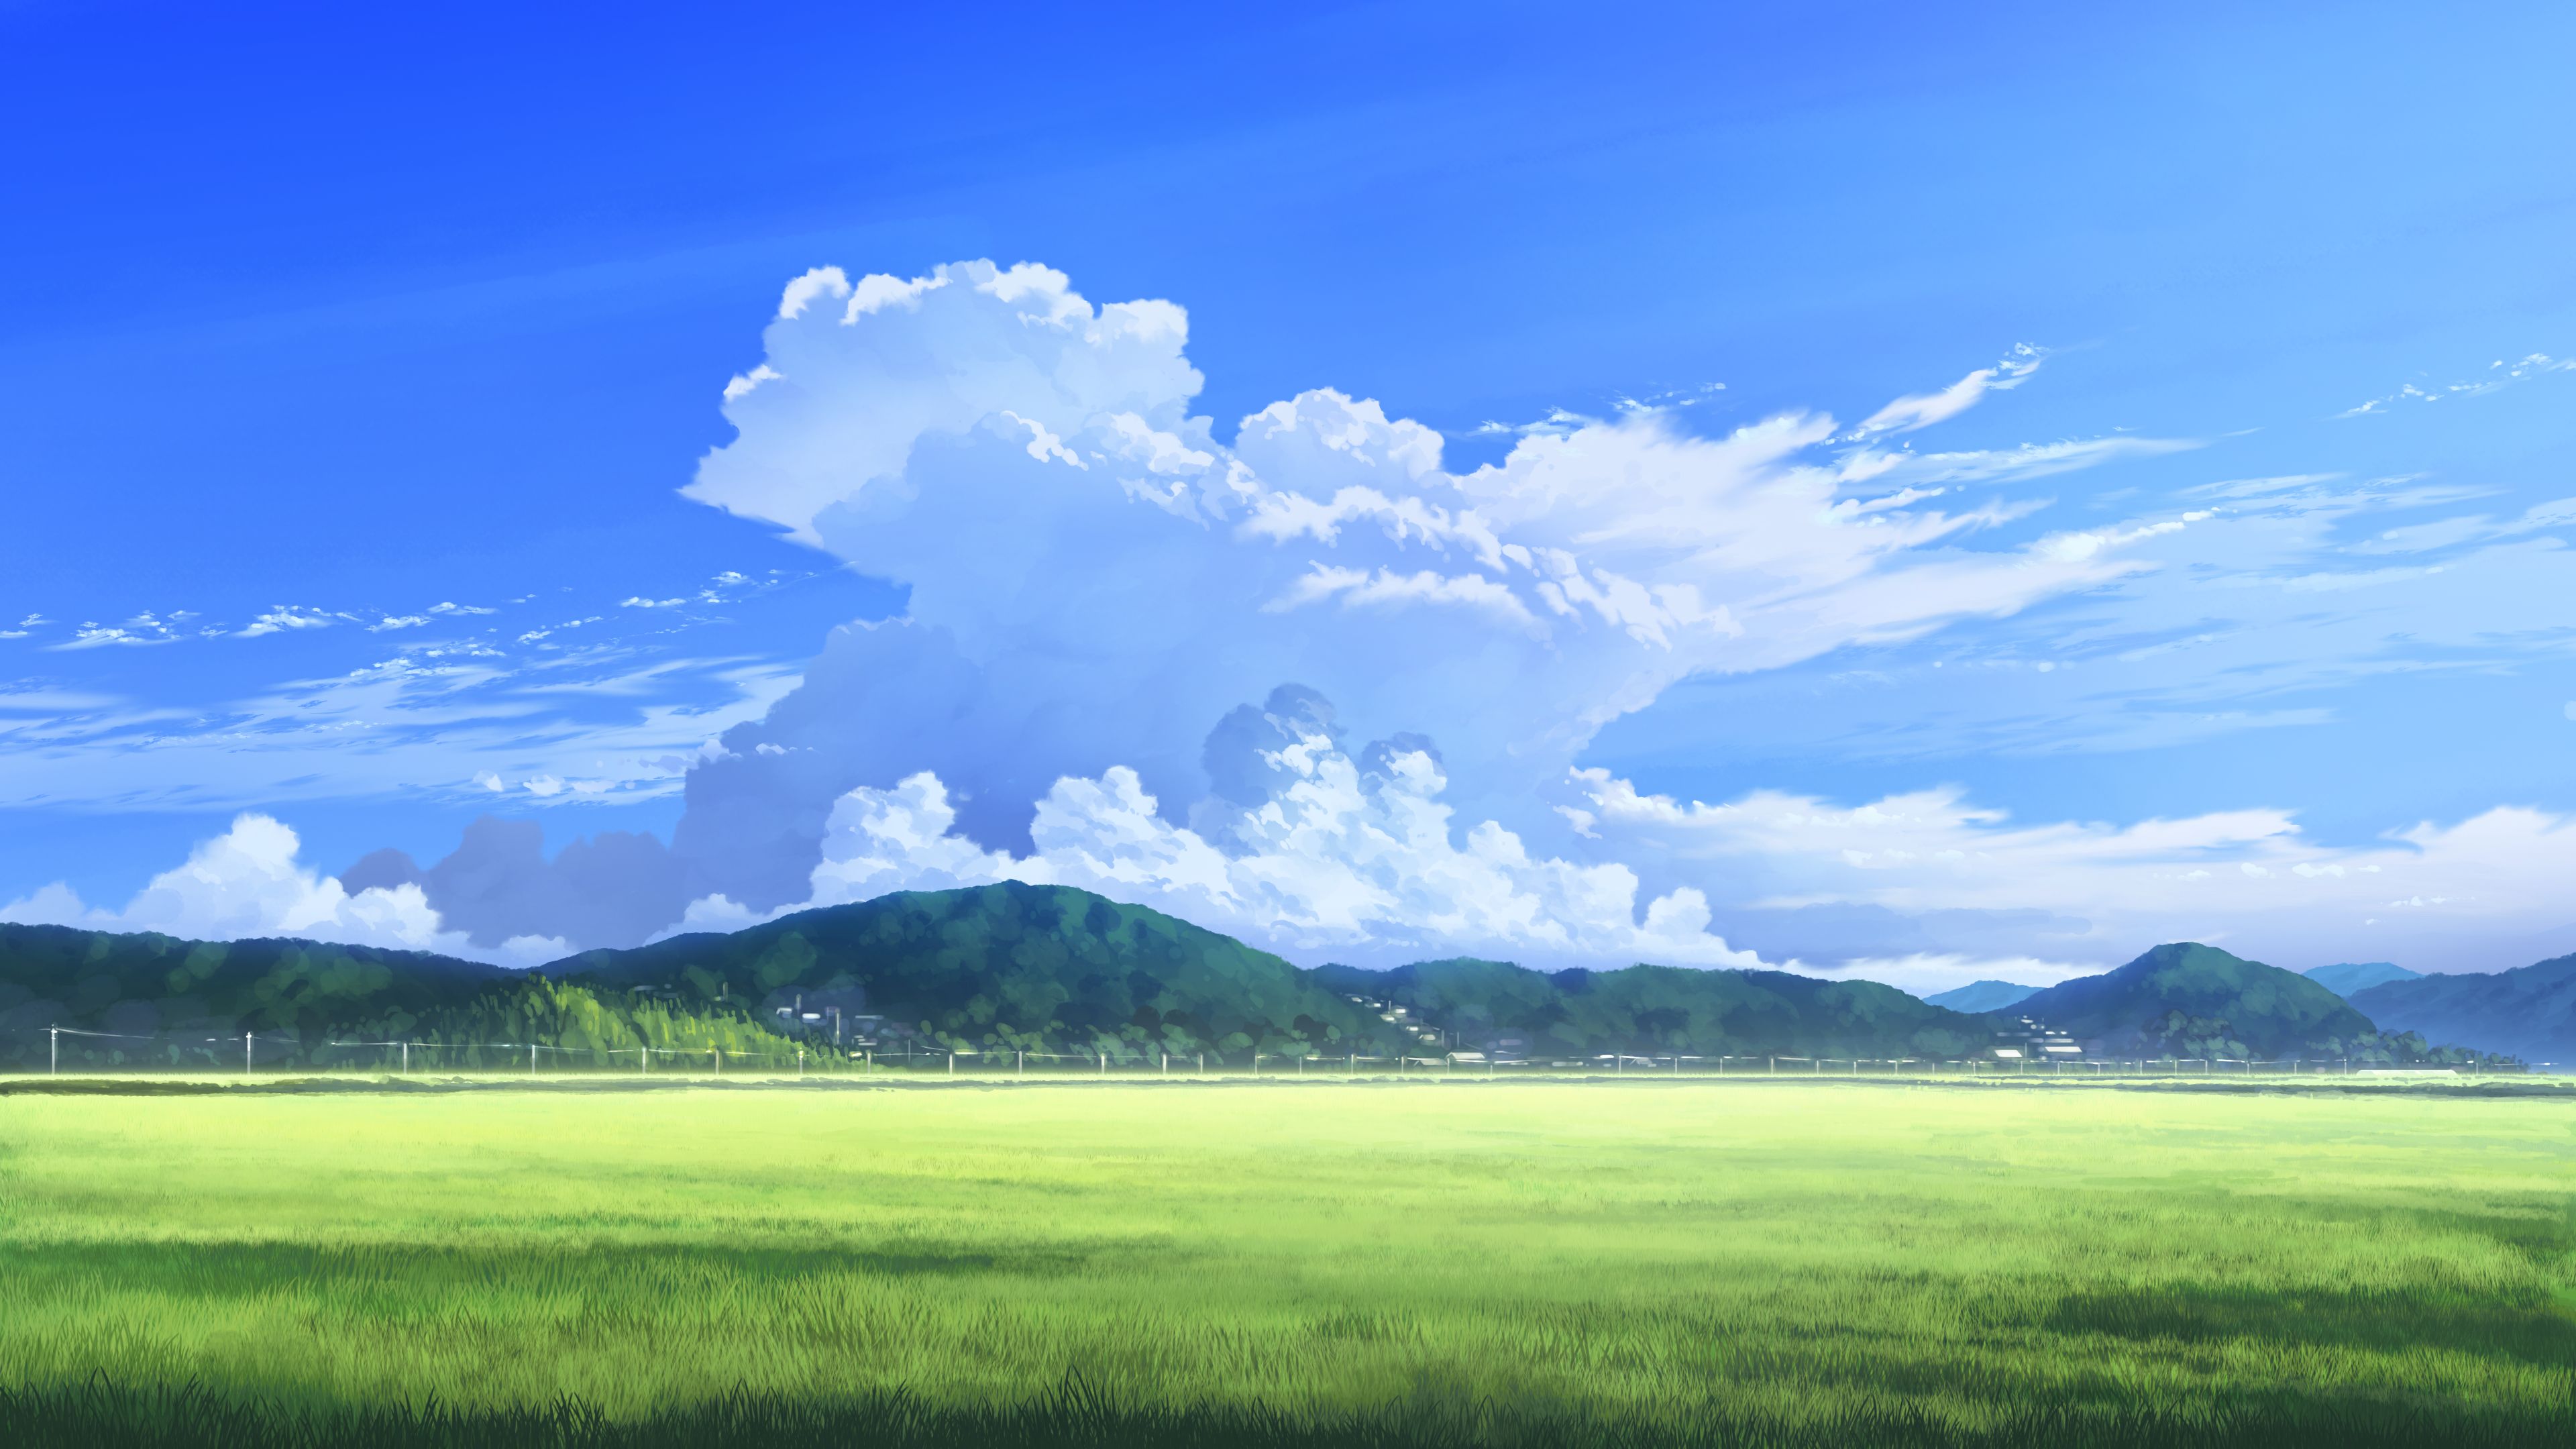 Anime 3840x2160 Cloud Atlas grass mountains clouds sky nature